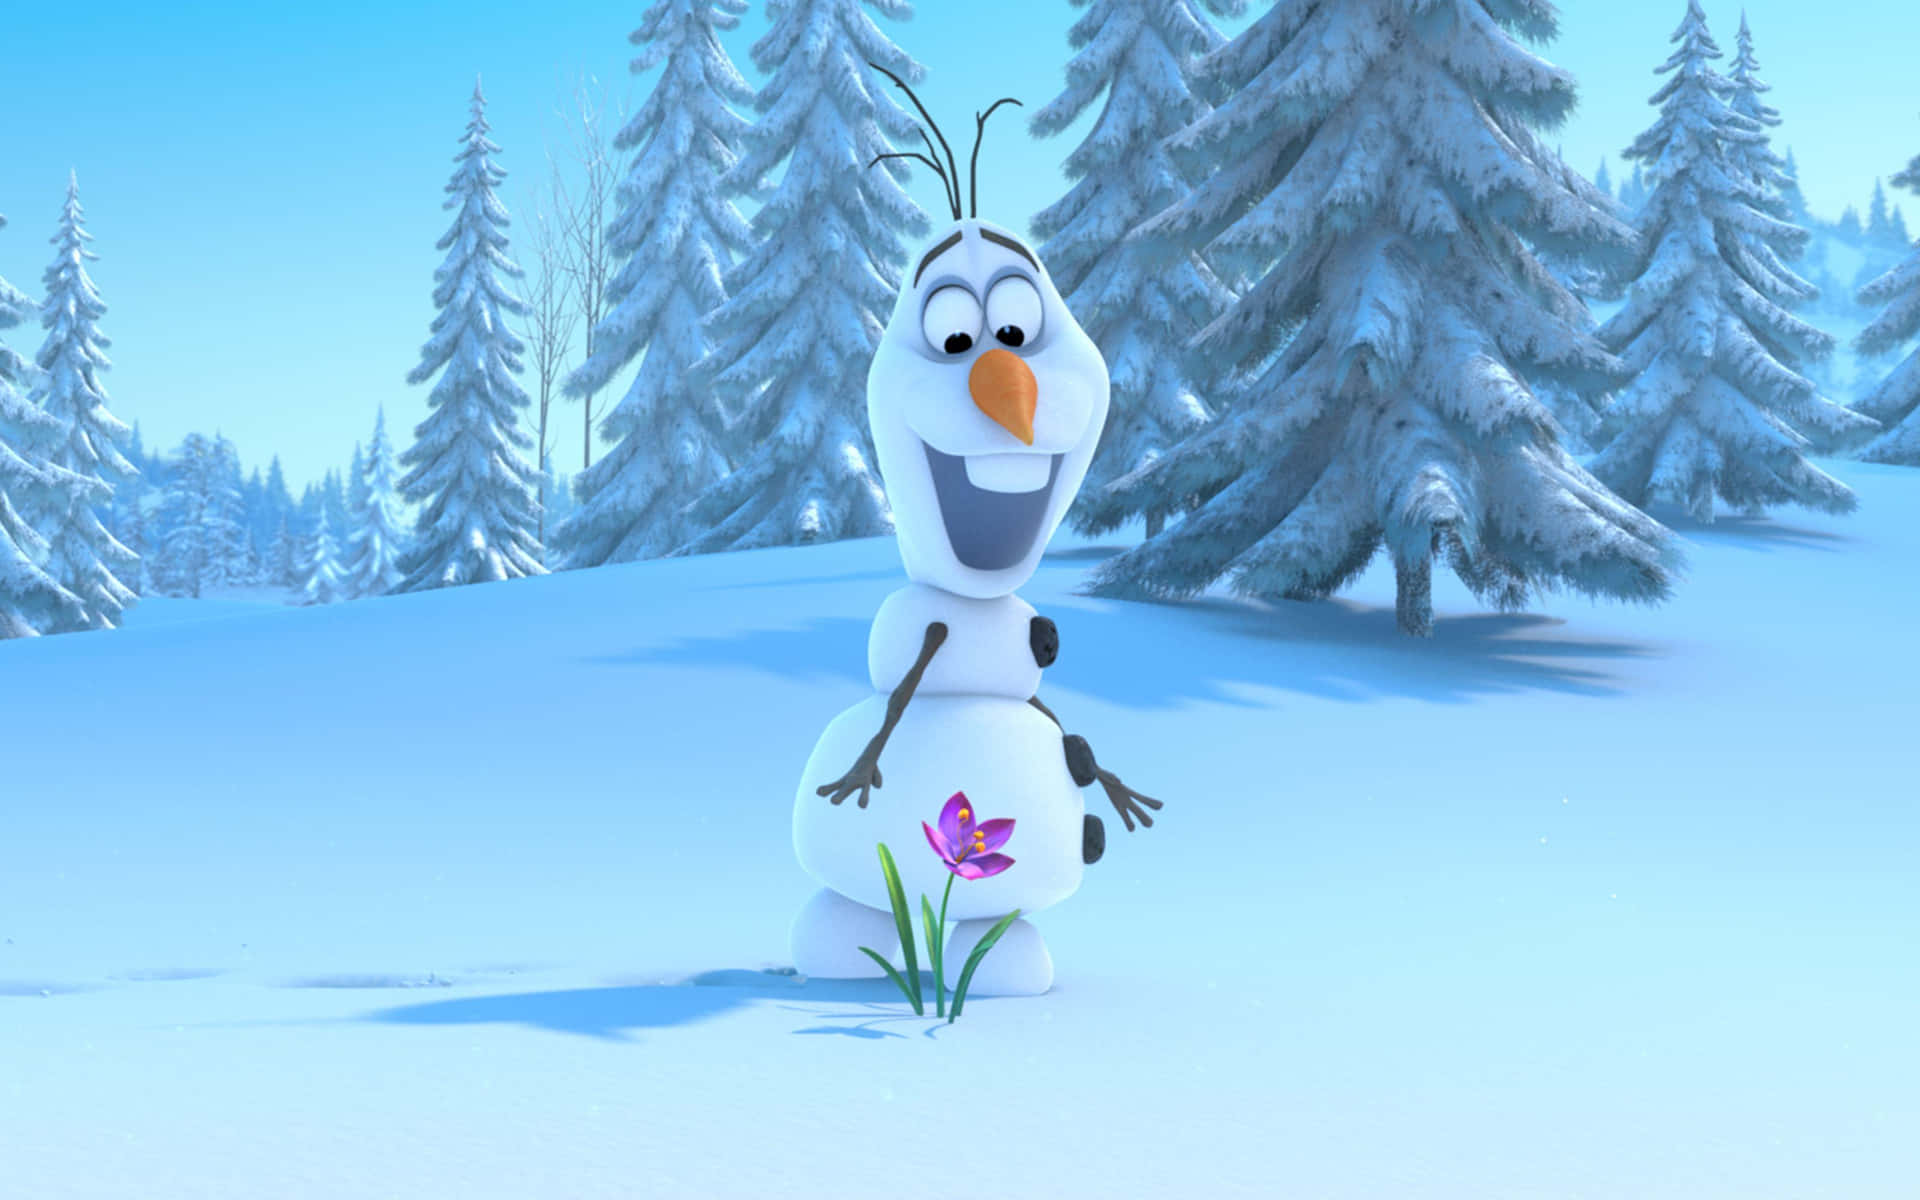 Cheerful Olaf spreading joy despite not having his summertime freedom. Wallpaper